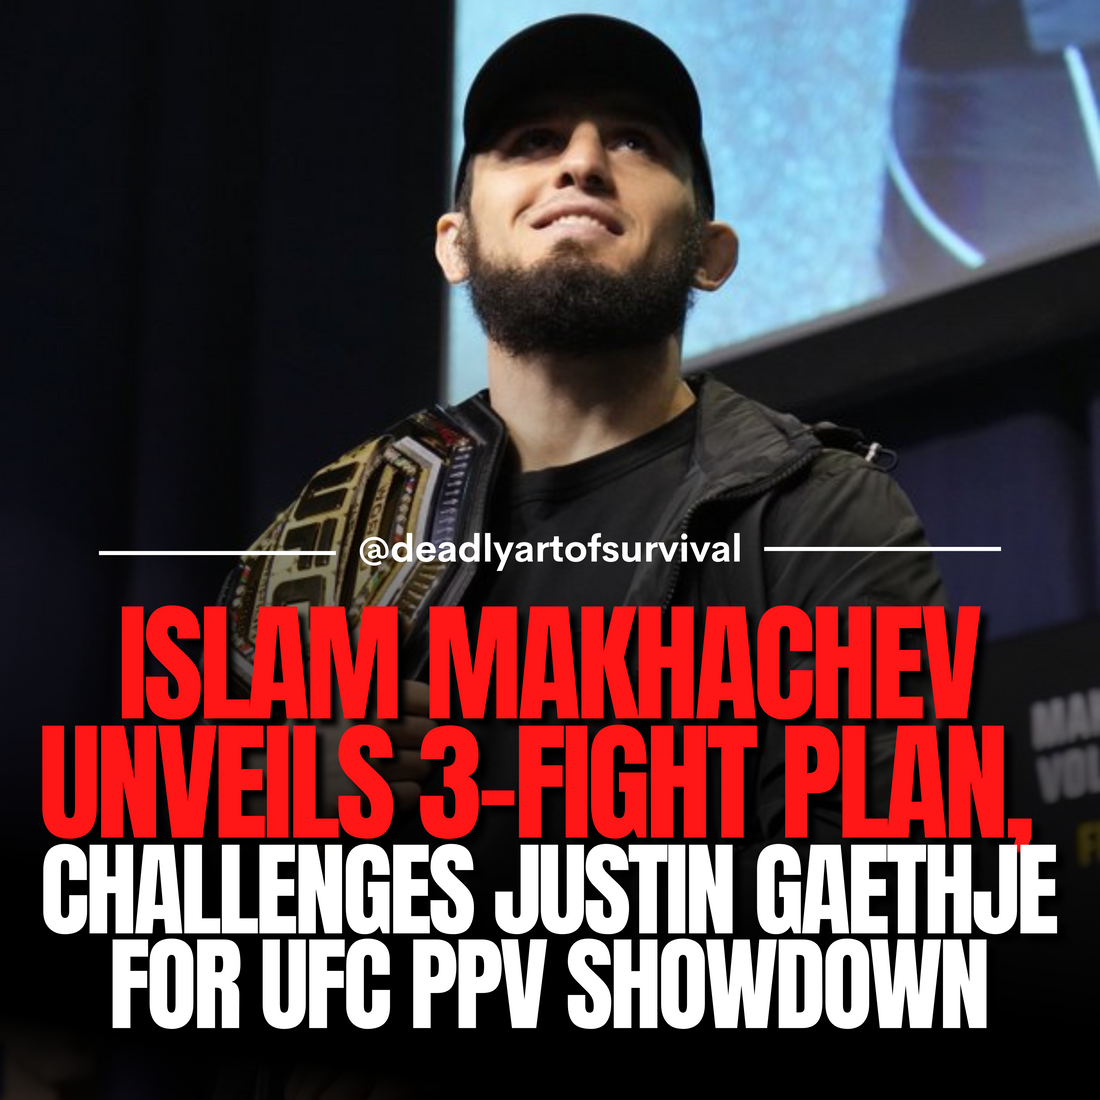 Islam-Makhachev-Unveils-3-Fight-Plan-Targets-Justin-Gaethje-Showdown-on-UFC-PPV deadlyartofsurvival.com